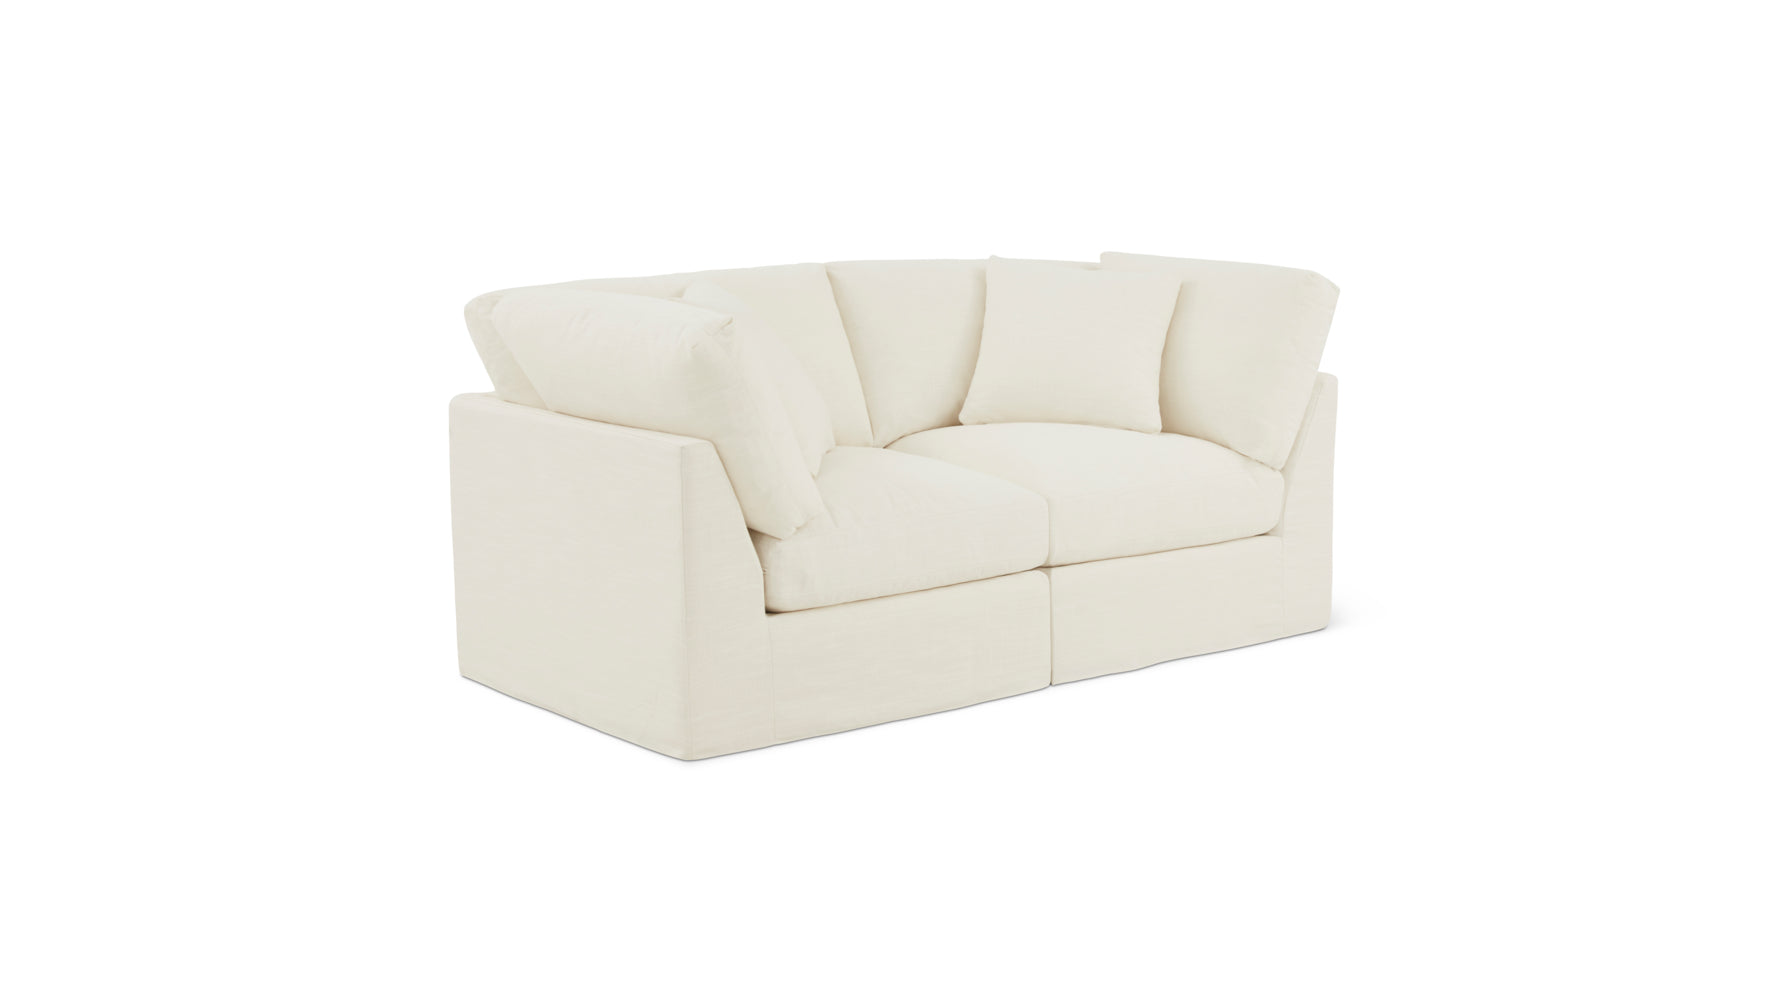 Get Together™ 2-Piece Modular Sofa, Standard, Cream Linen - Image 2